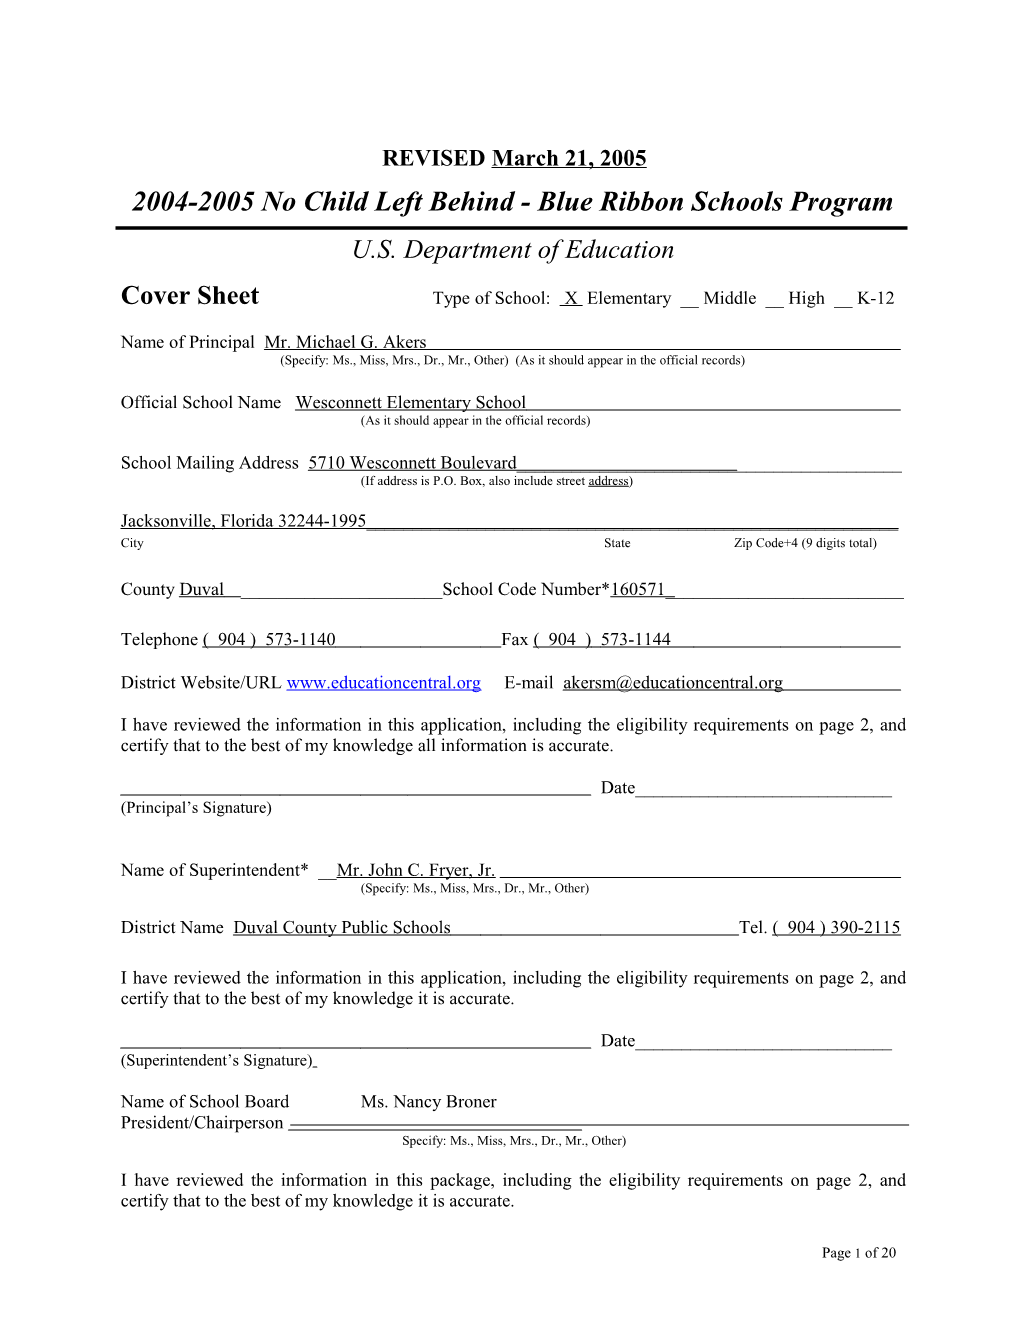 Wesconnett Elementary School Application: 2004-2005, No Child Left Behind - Blue Ribbon